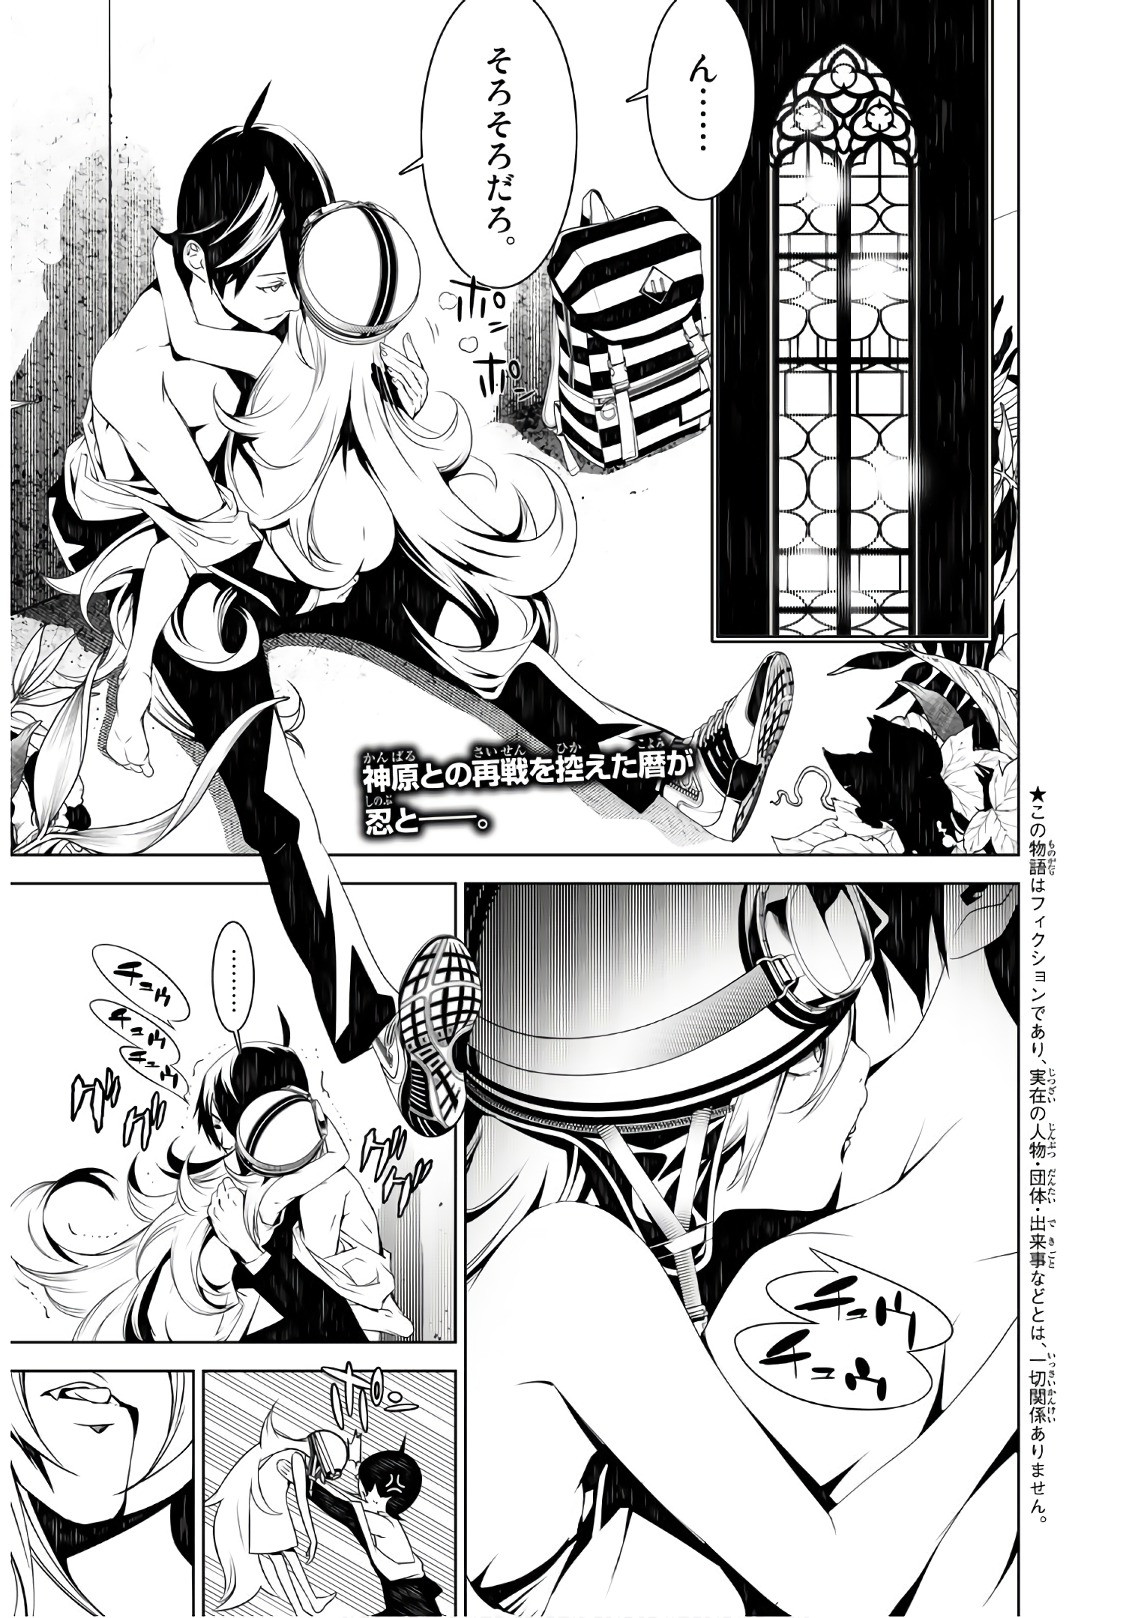 Bakemonogatari - Chapter 37 - Page 2